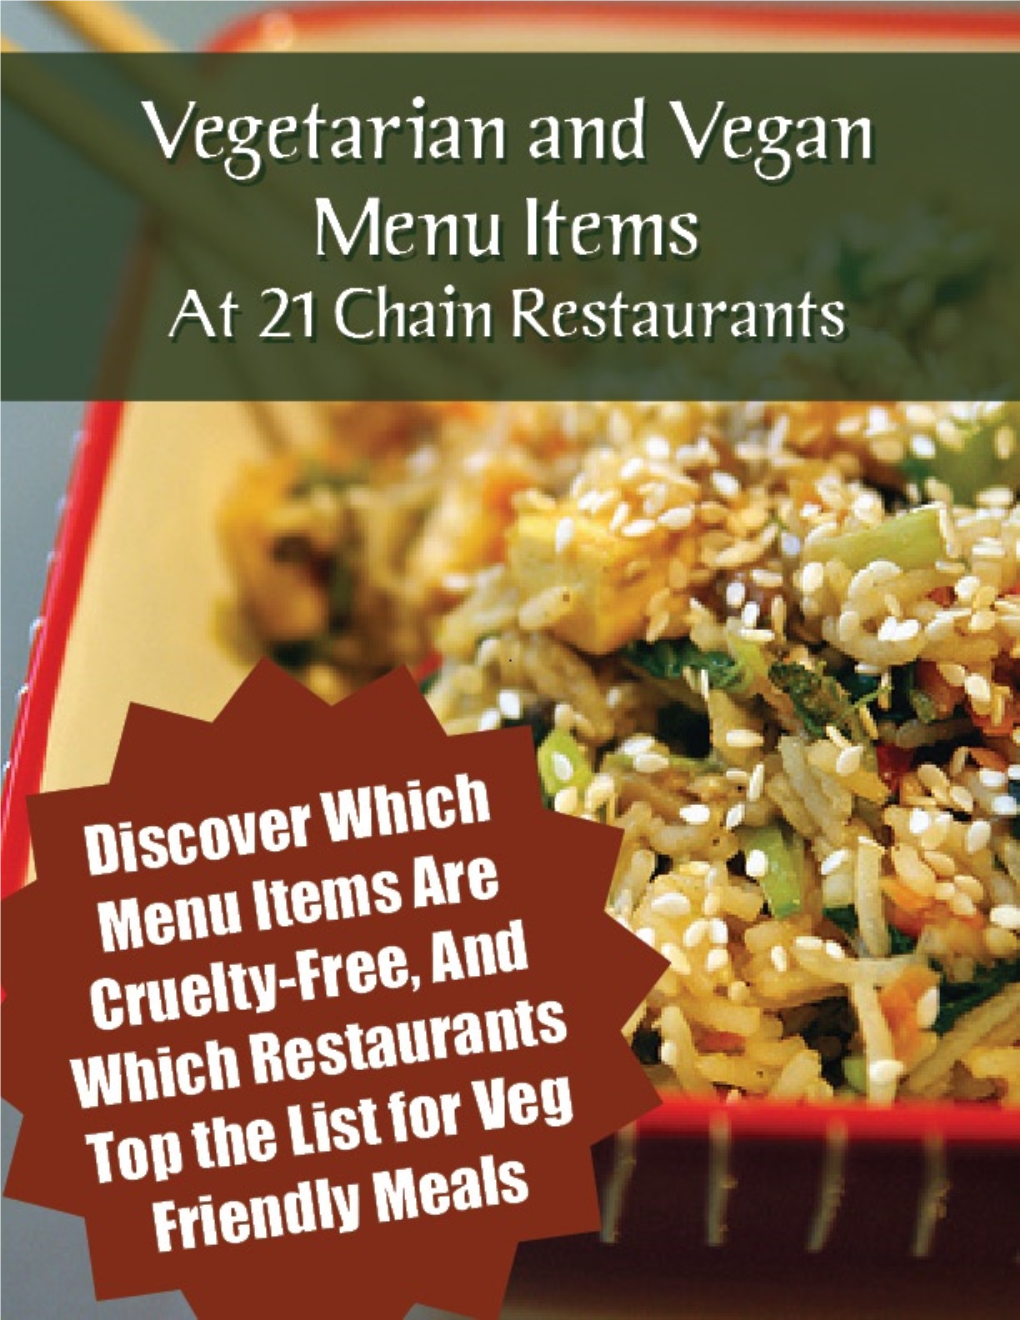 Part 1: Veggie Options at Quick-Service Restaurant Chains